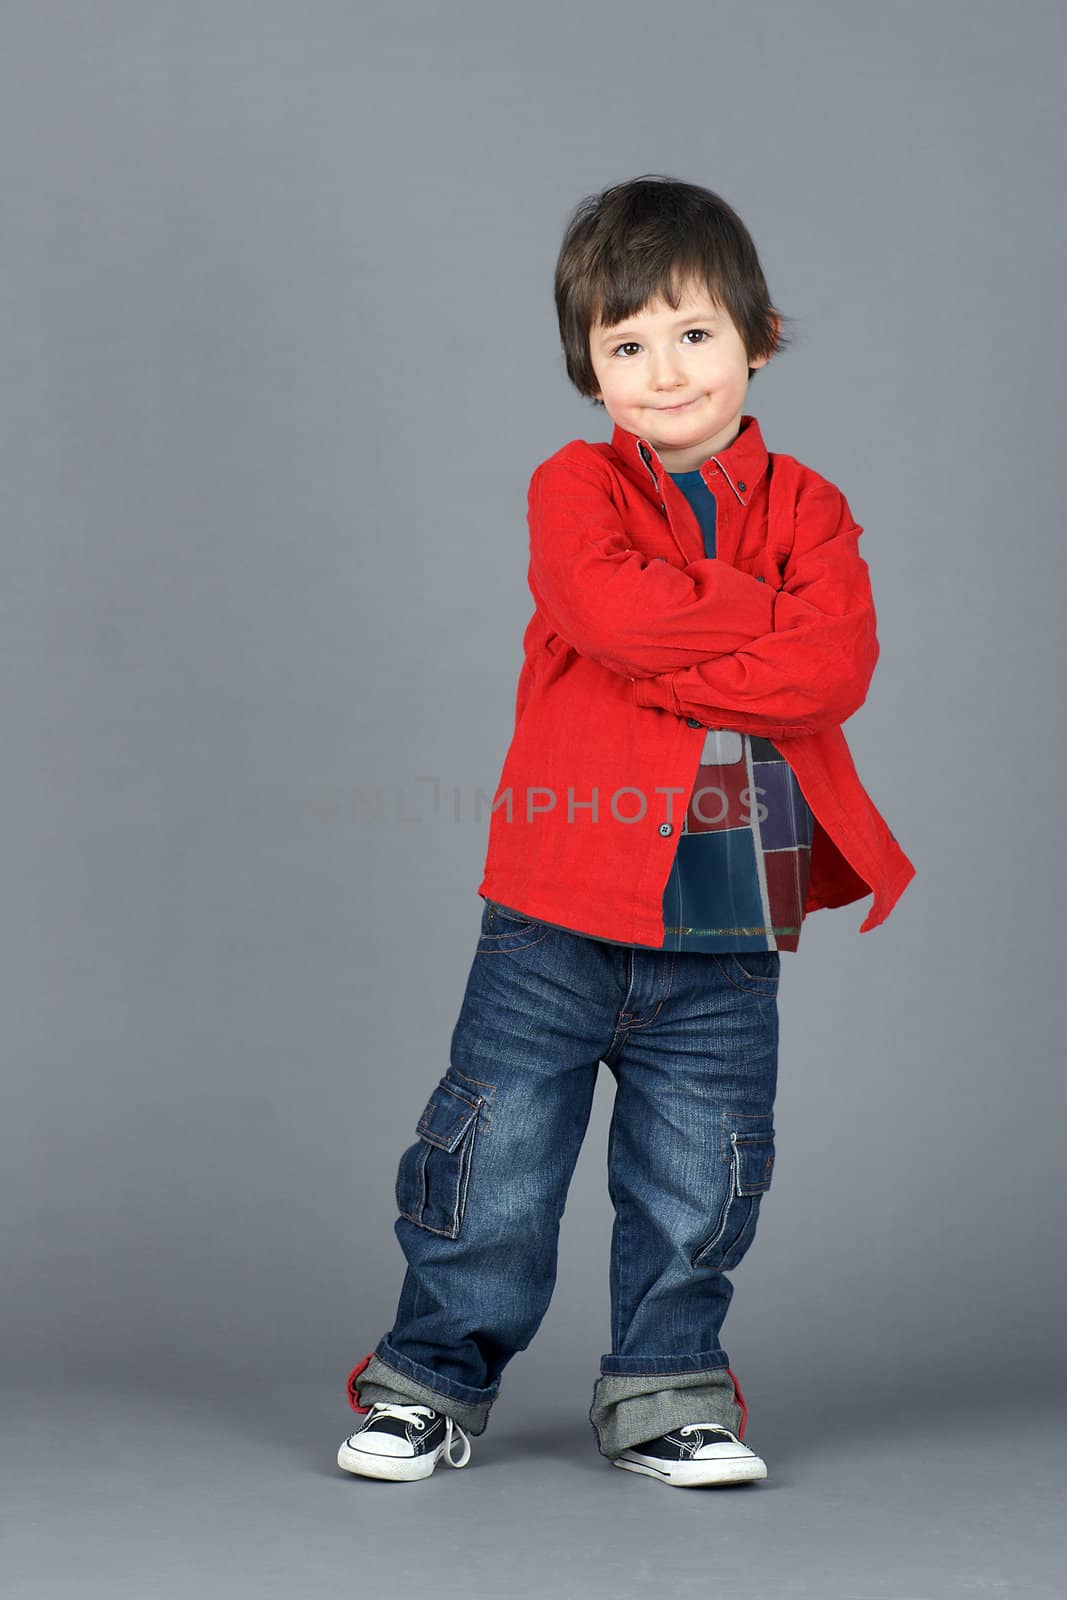 Cute little boy in red leaning by Mirage3